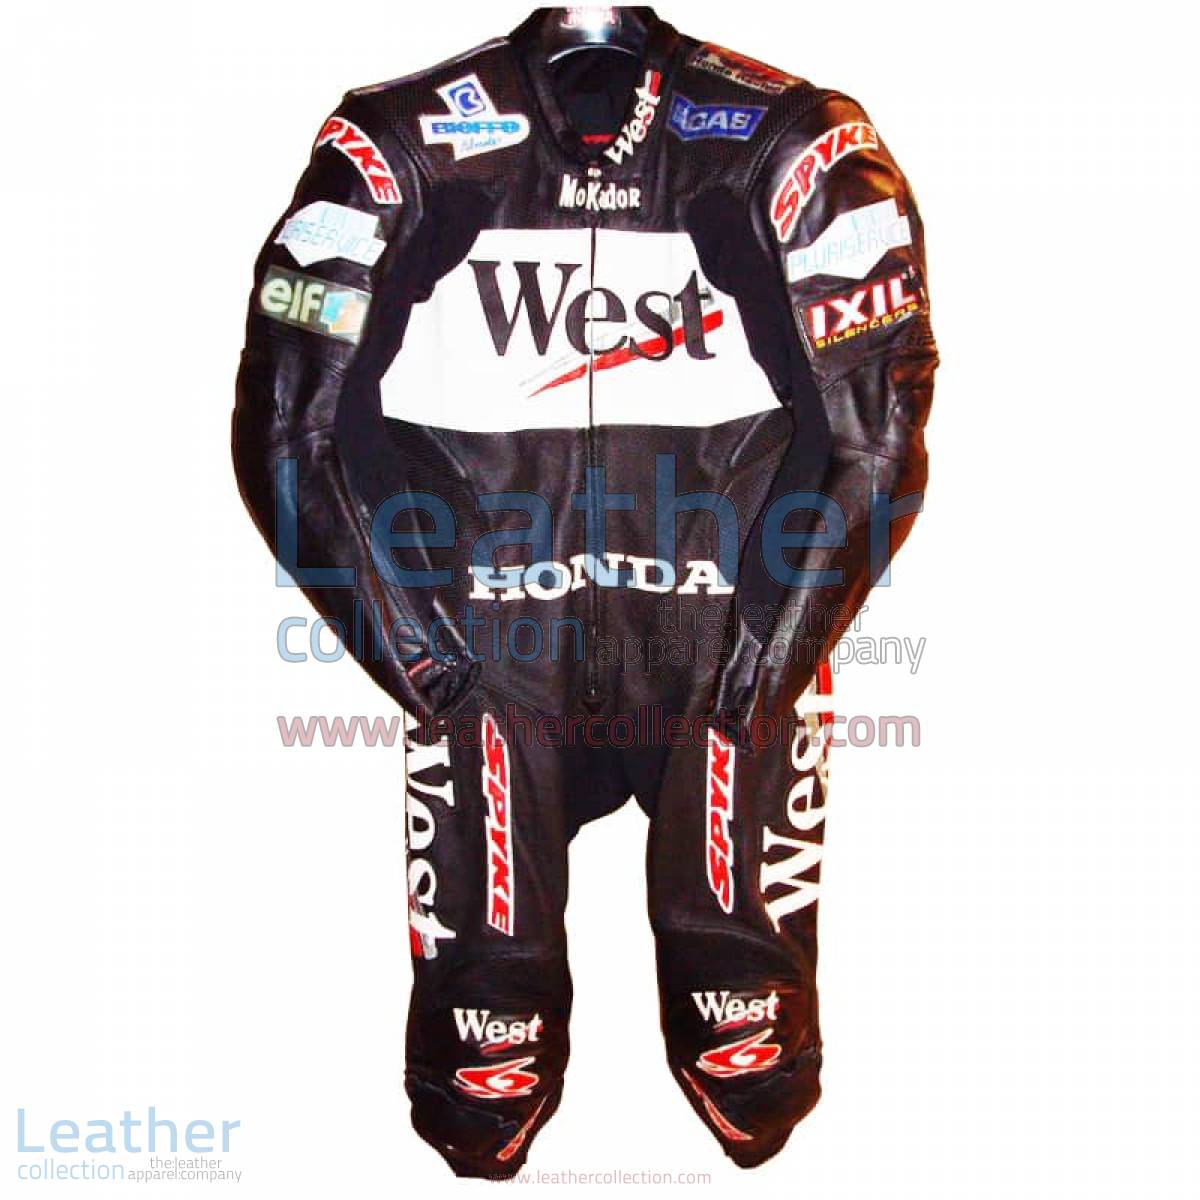 Loris Capirossi Honda GP 2001 Motorcycle Leathers | honda motorcycle leathers